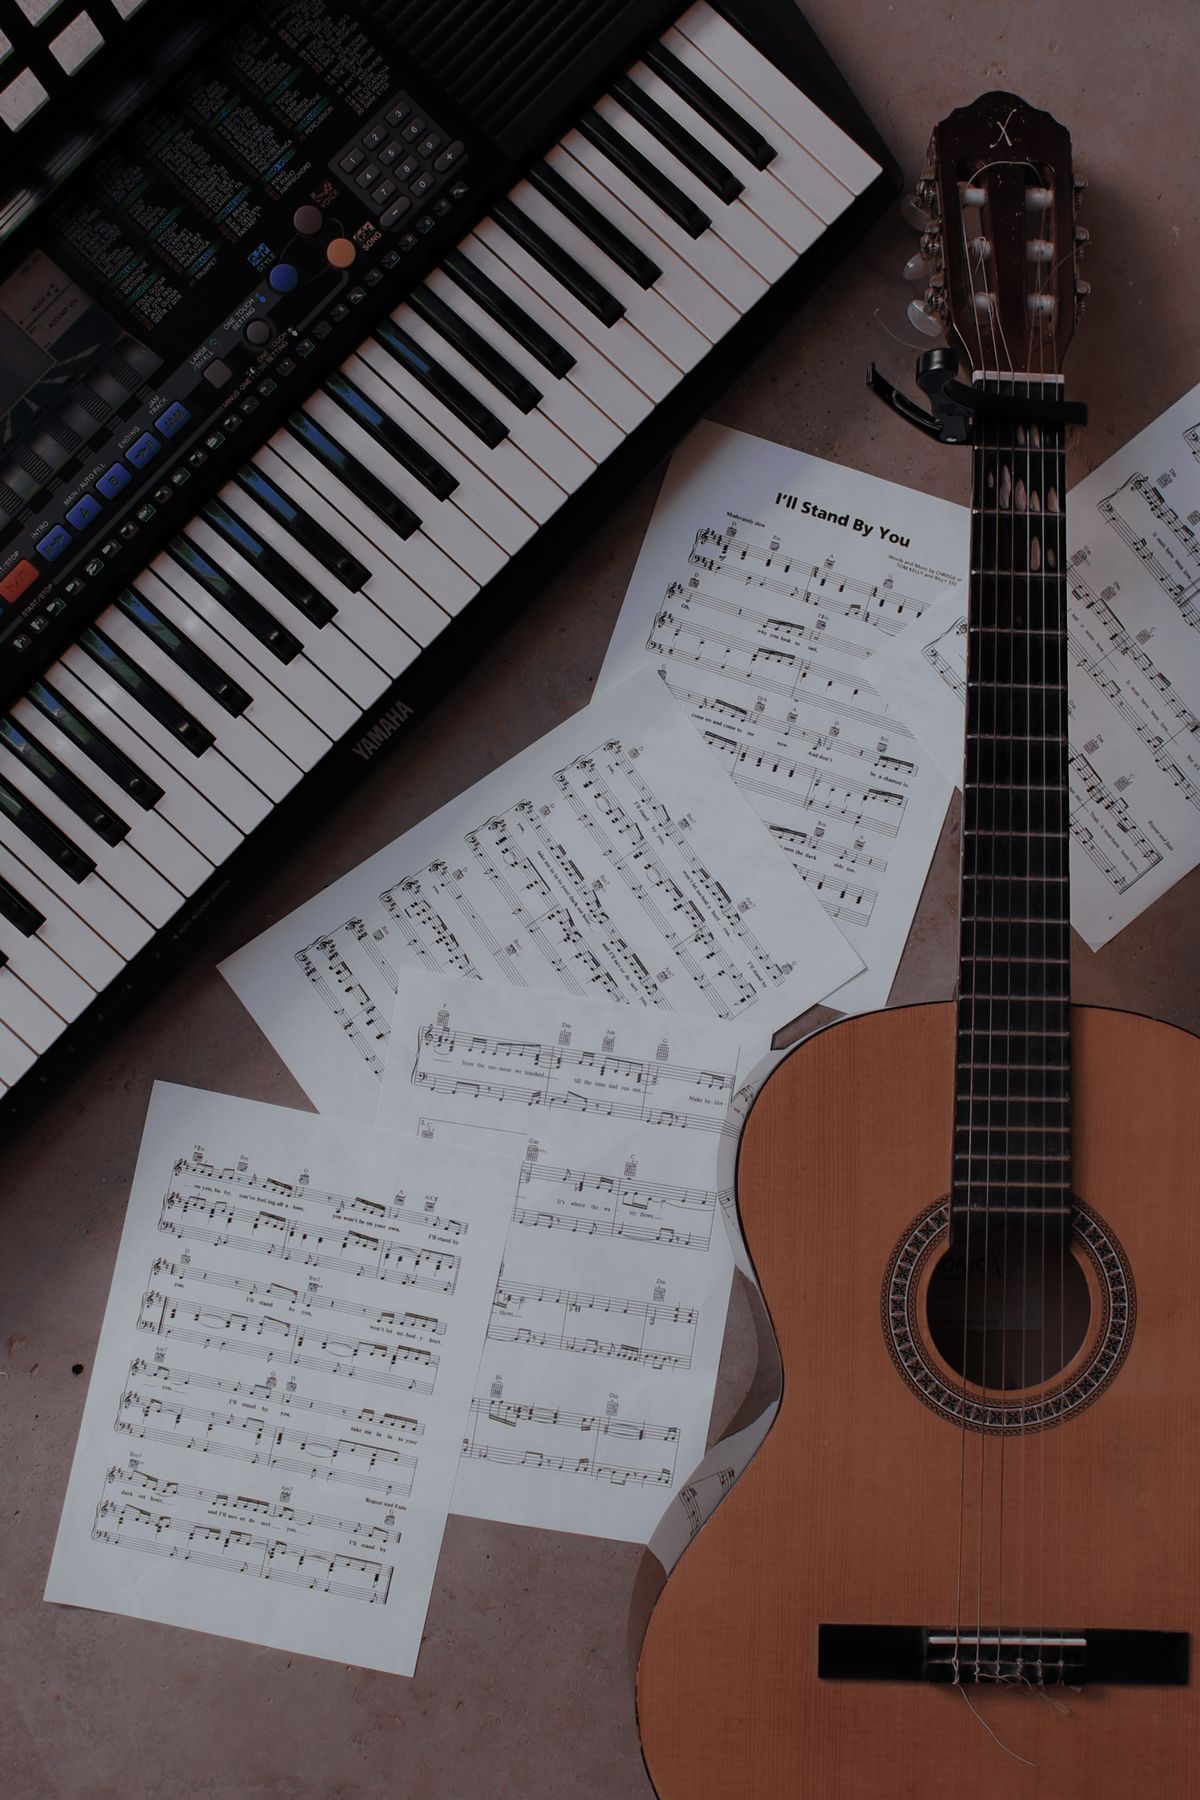 Sheet music, a guitar, and a keyboard - Piano, guitar